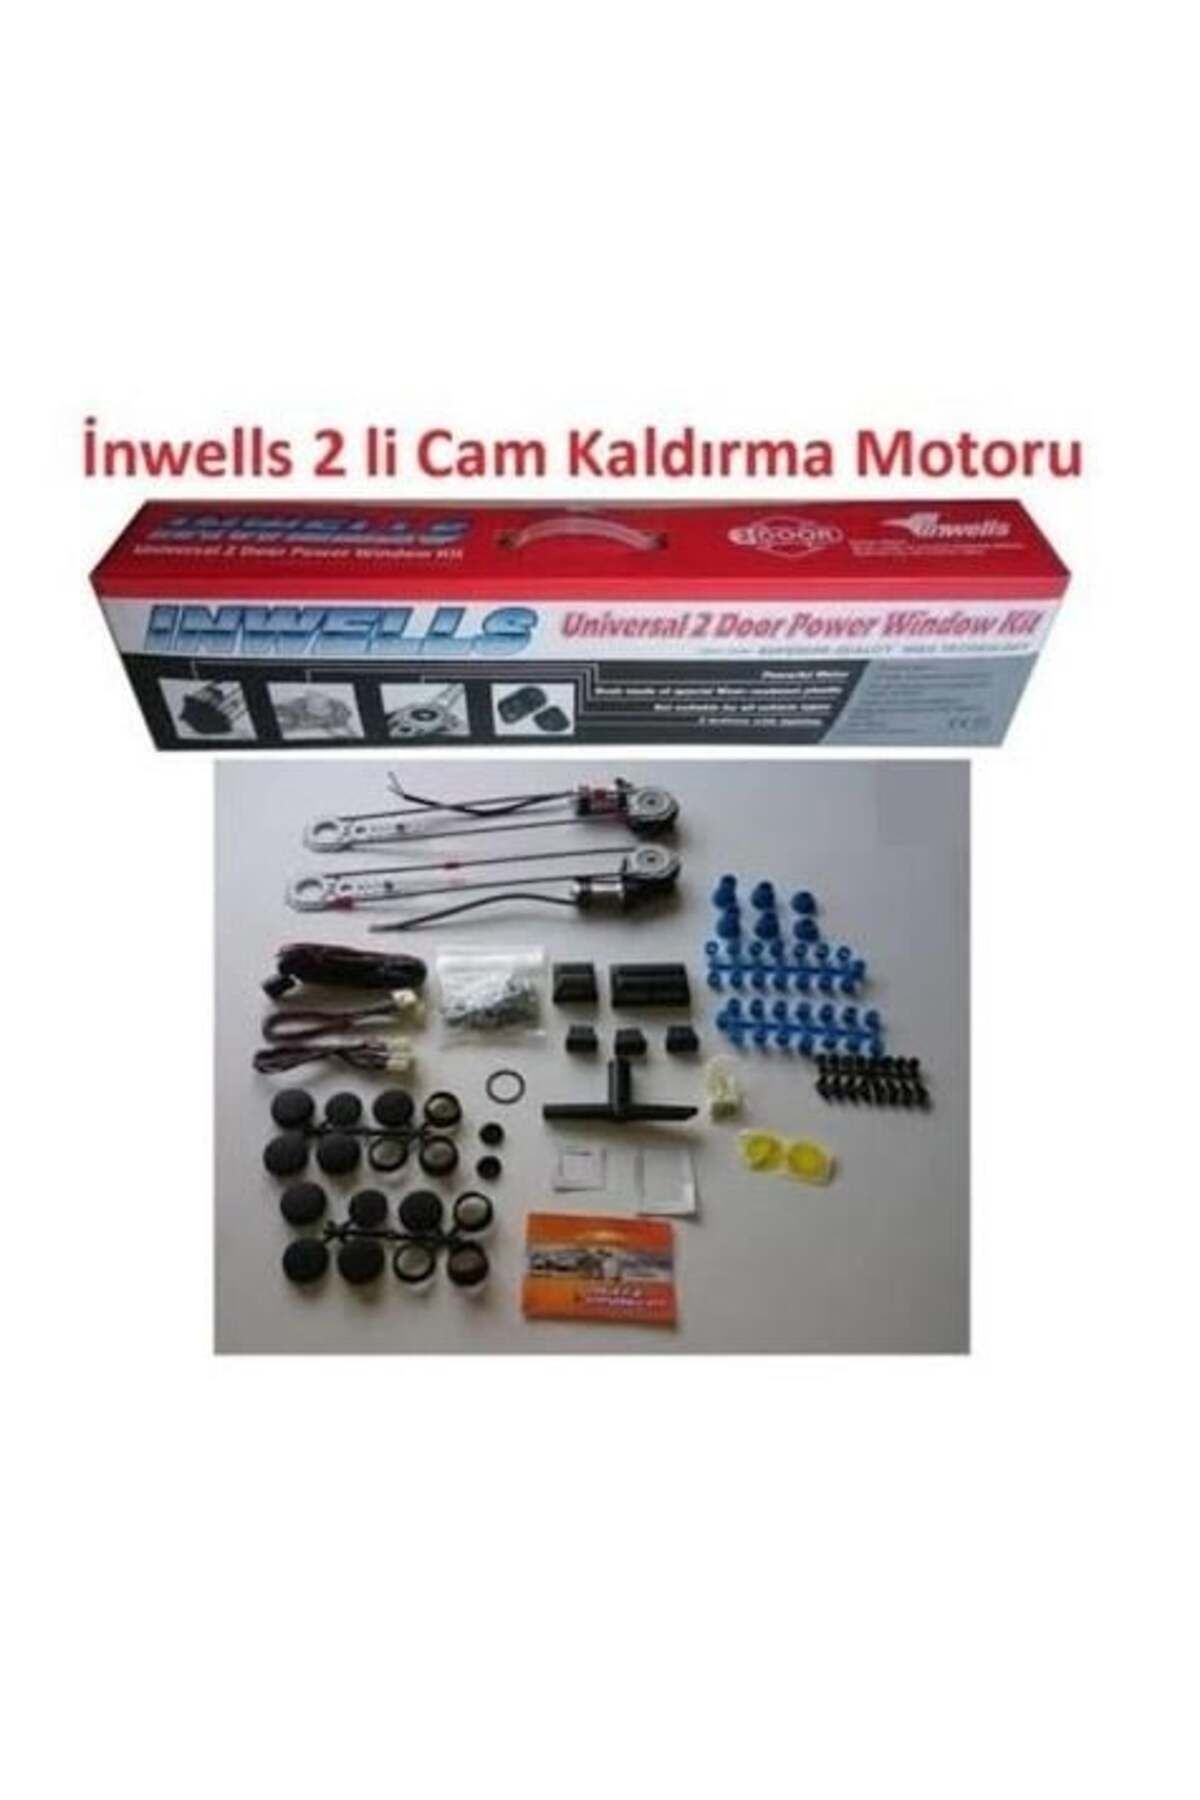 Inwells 12v Cam Kaldırma Motoru (CAM KALDIRMA SETİ) (2 CAM) Unıversal